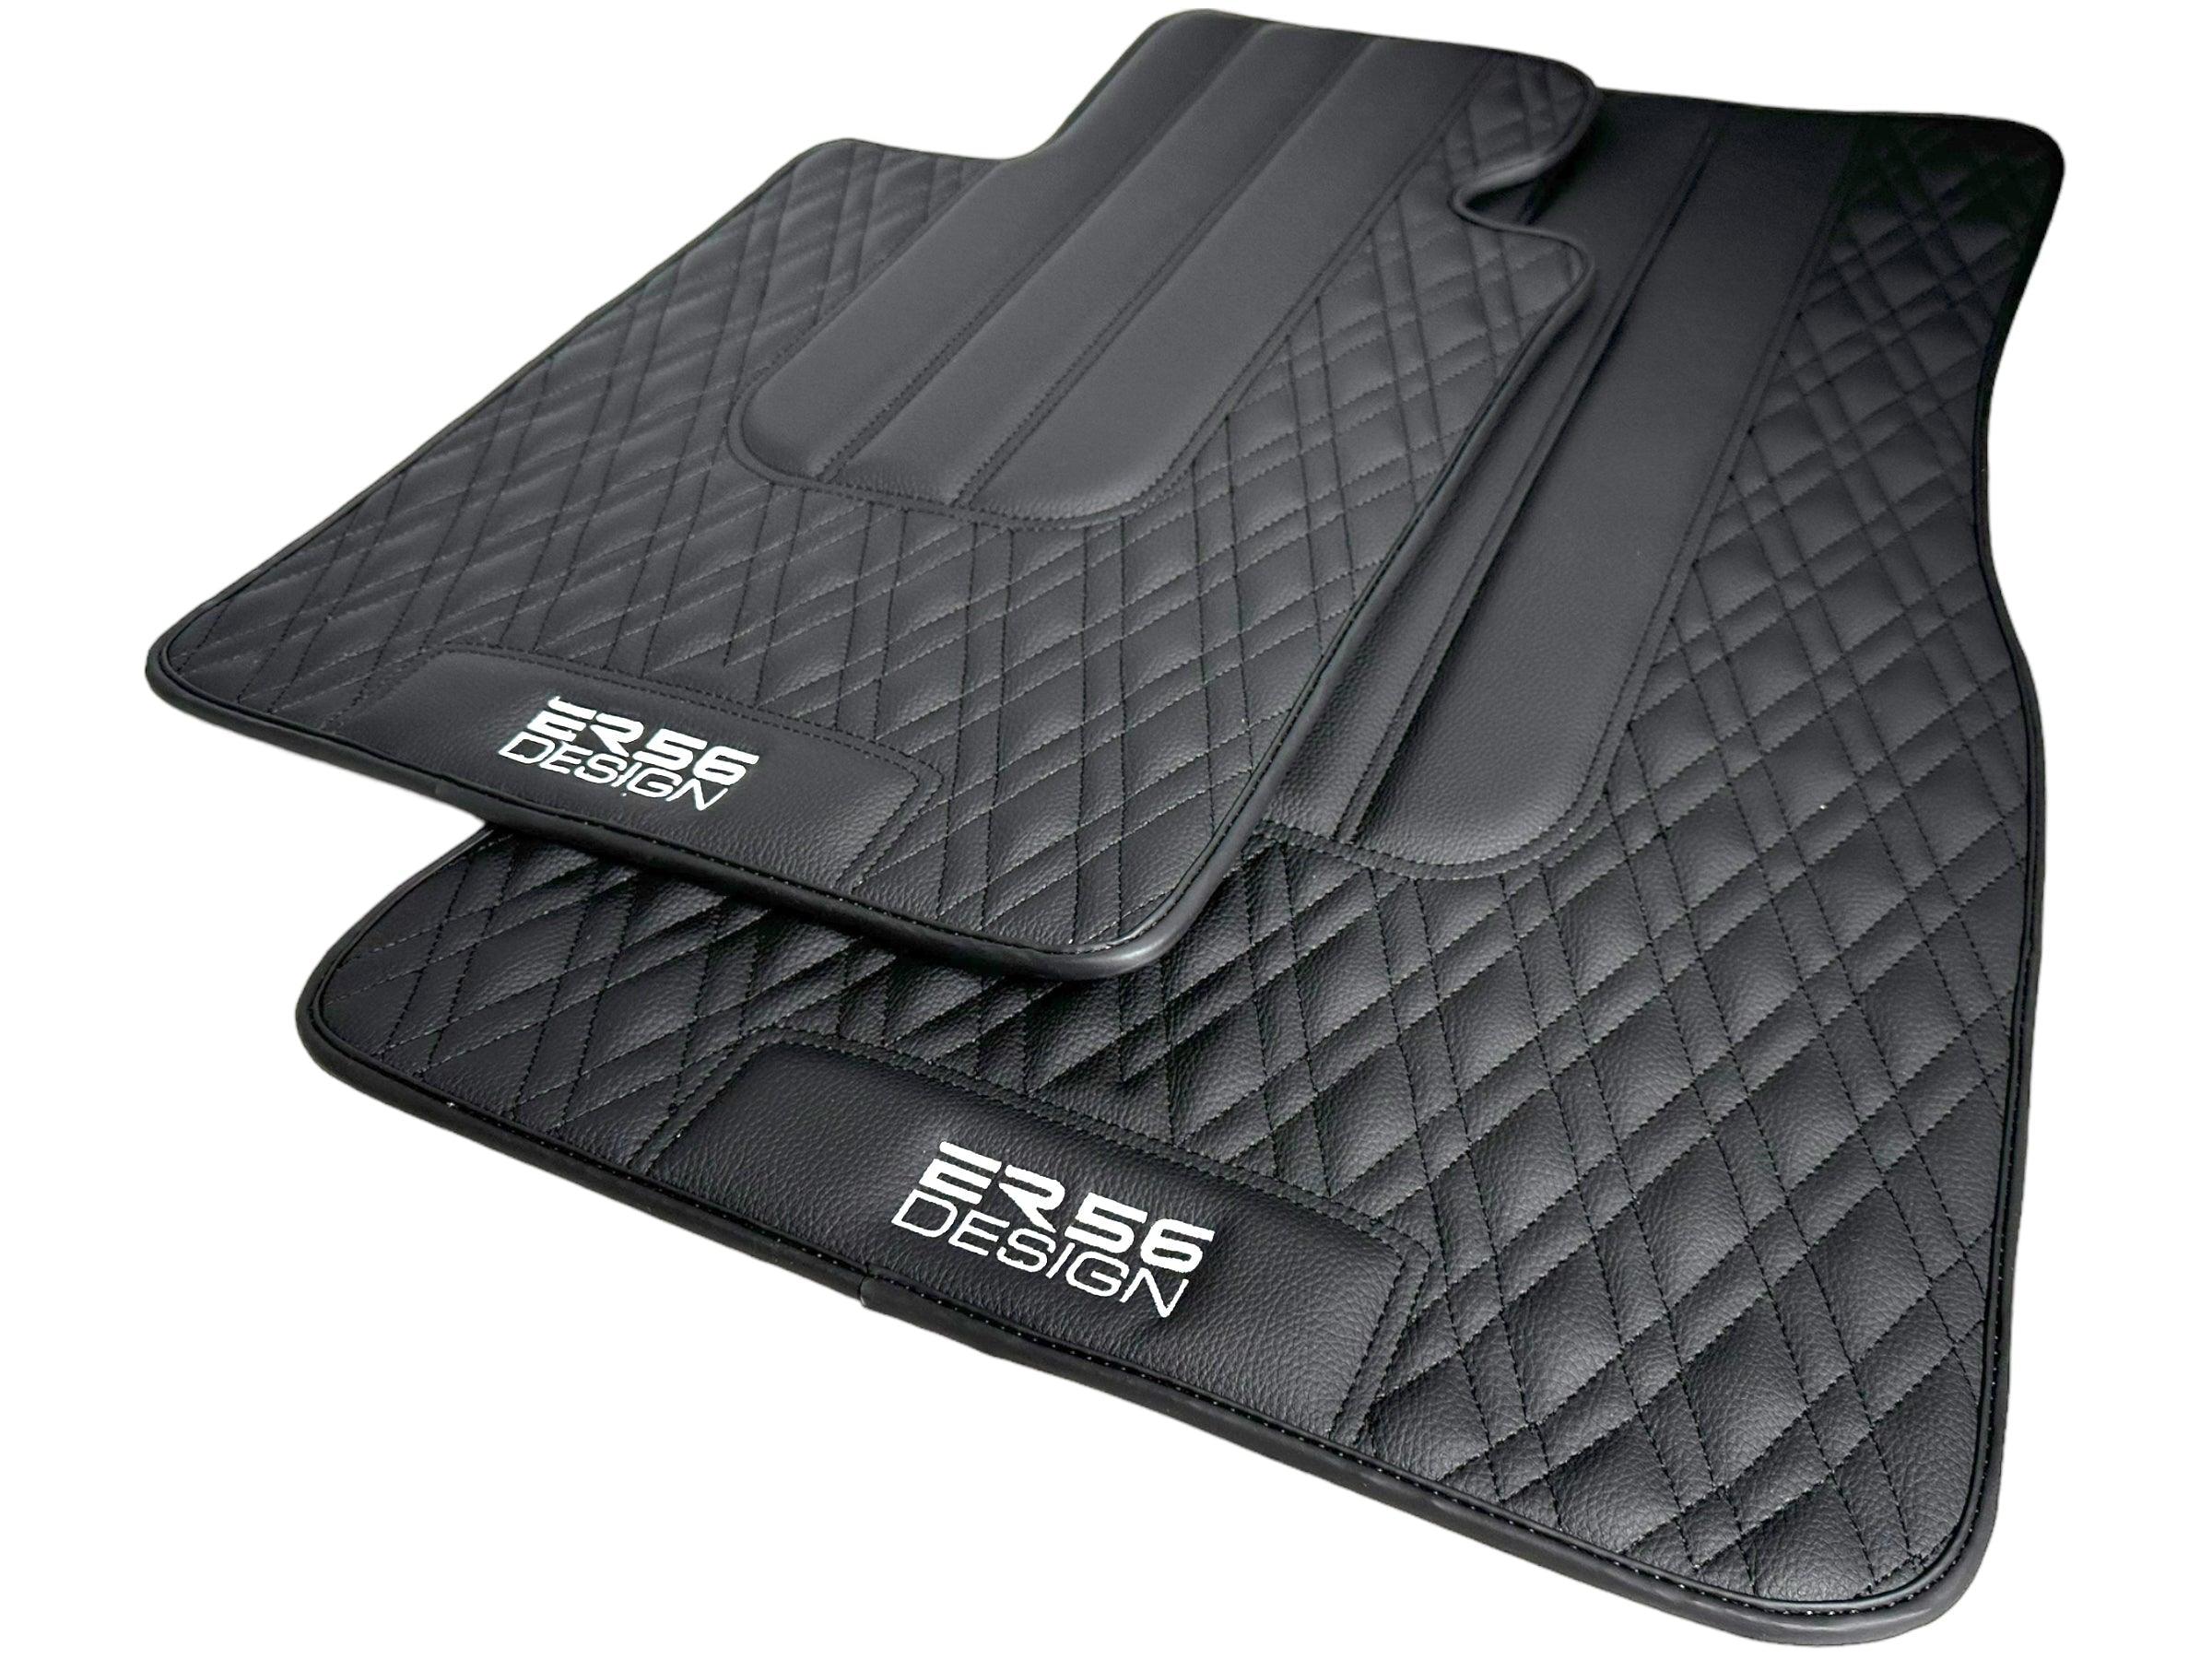 Floor Mats For BMW 7 Series G11 Black Leather Er56 Design - AutoWin